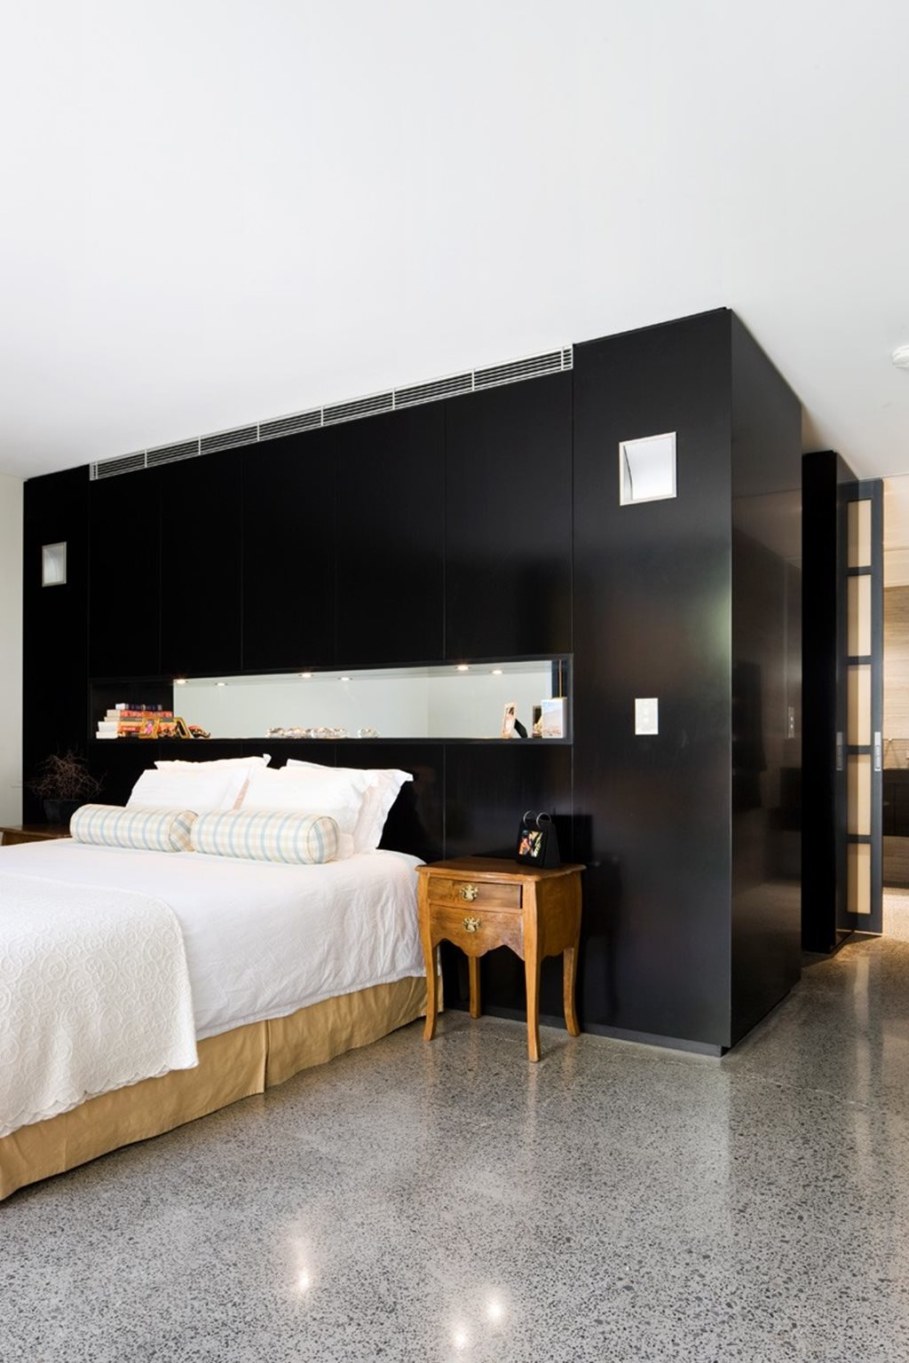 Grand loft house in Australia by Corben Architects studio - Bedroom 2